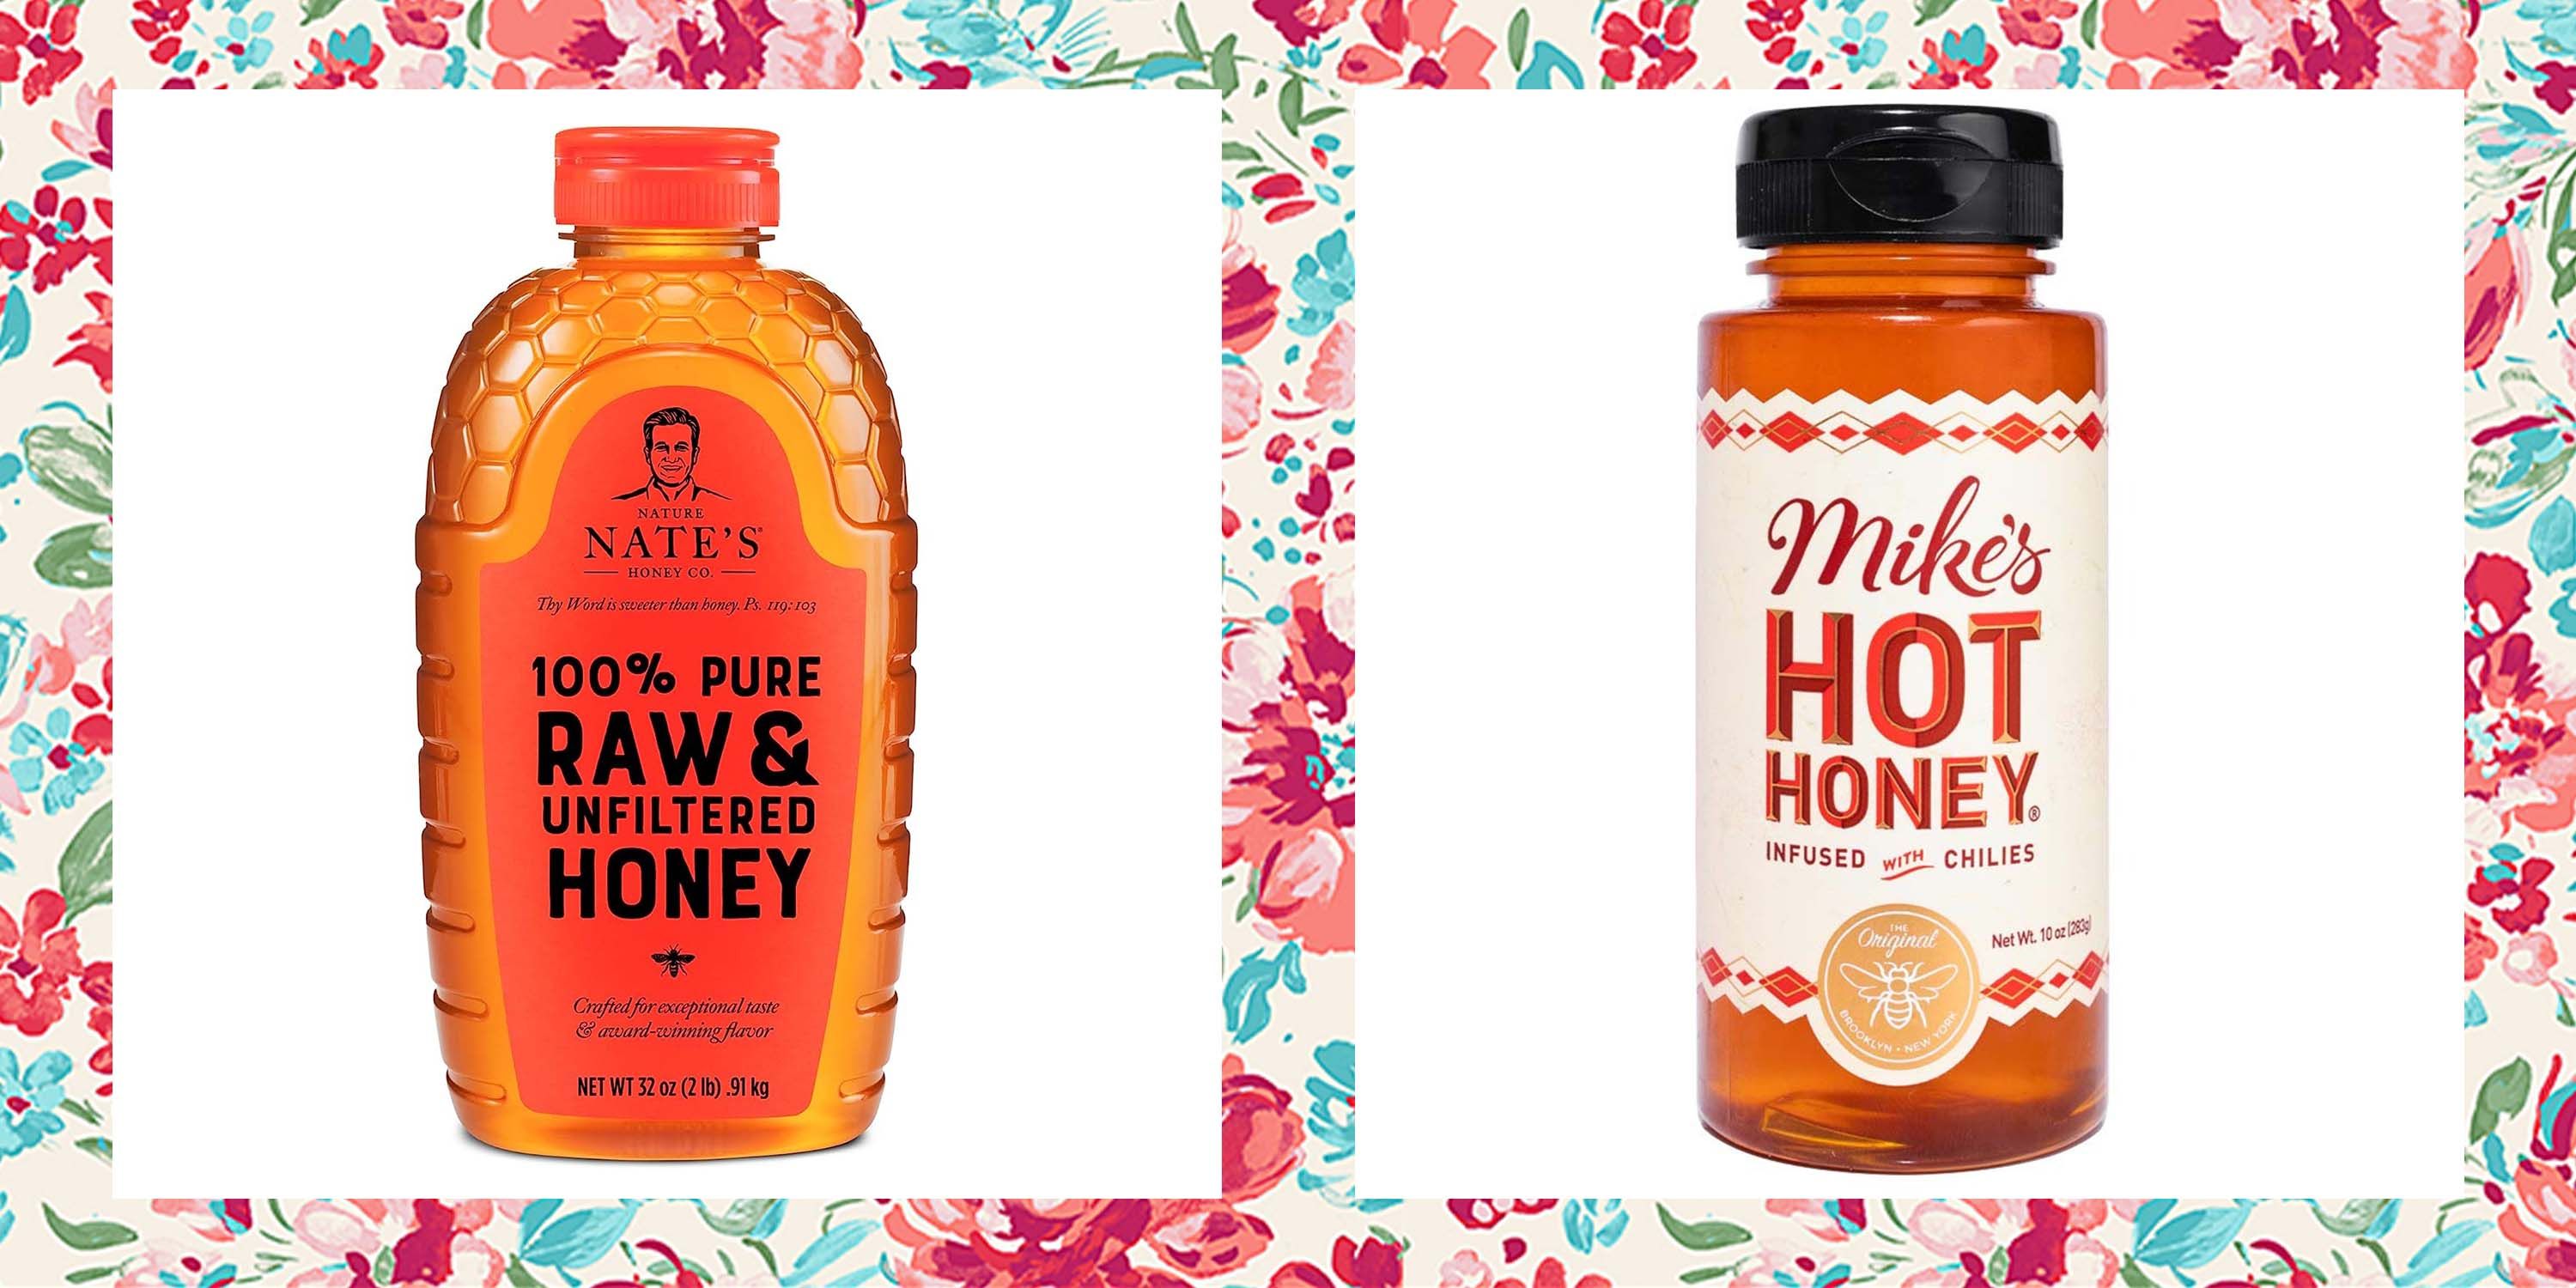 Award-winning raw honey, preserves and healthy alternatives